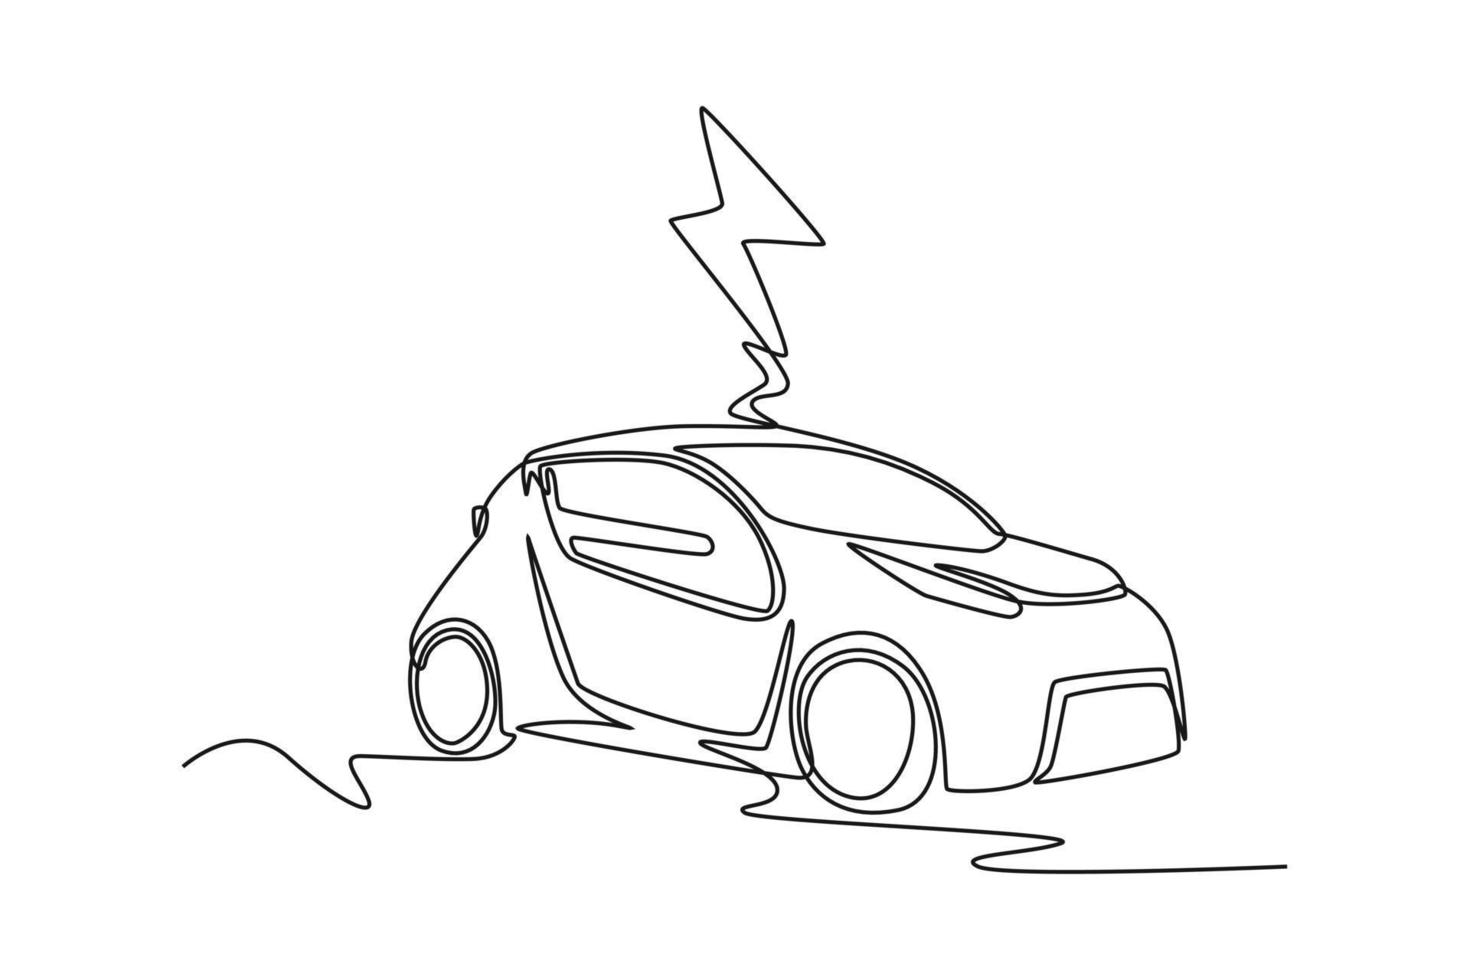 kontinuerlig en linje teckning elektrisk bil med elektrisk symbol på Det. elektrisk bil begrepp enda linje drar design grafisk vektor illustration